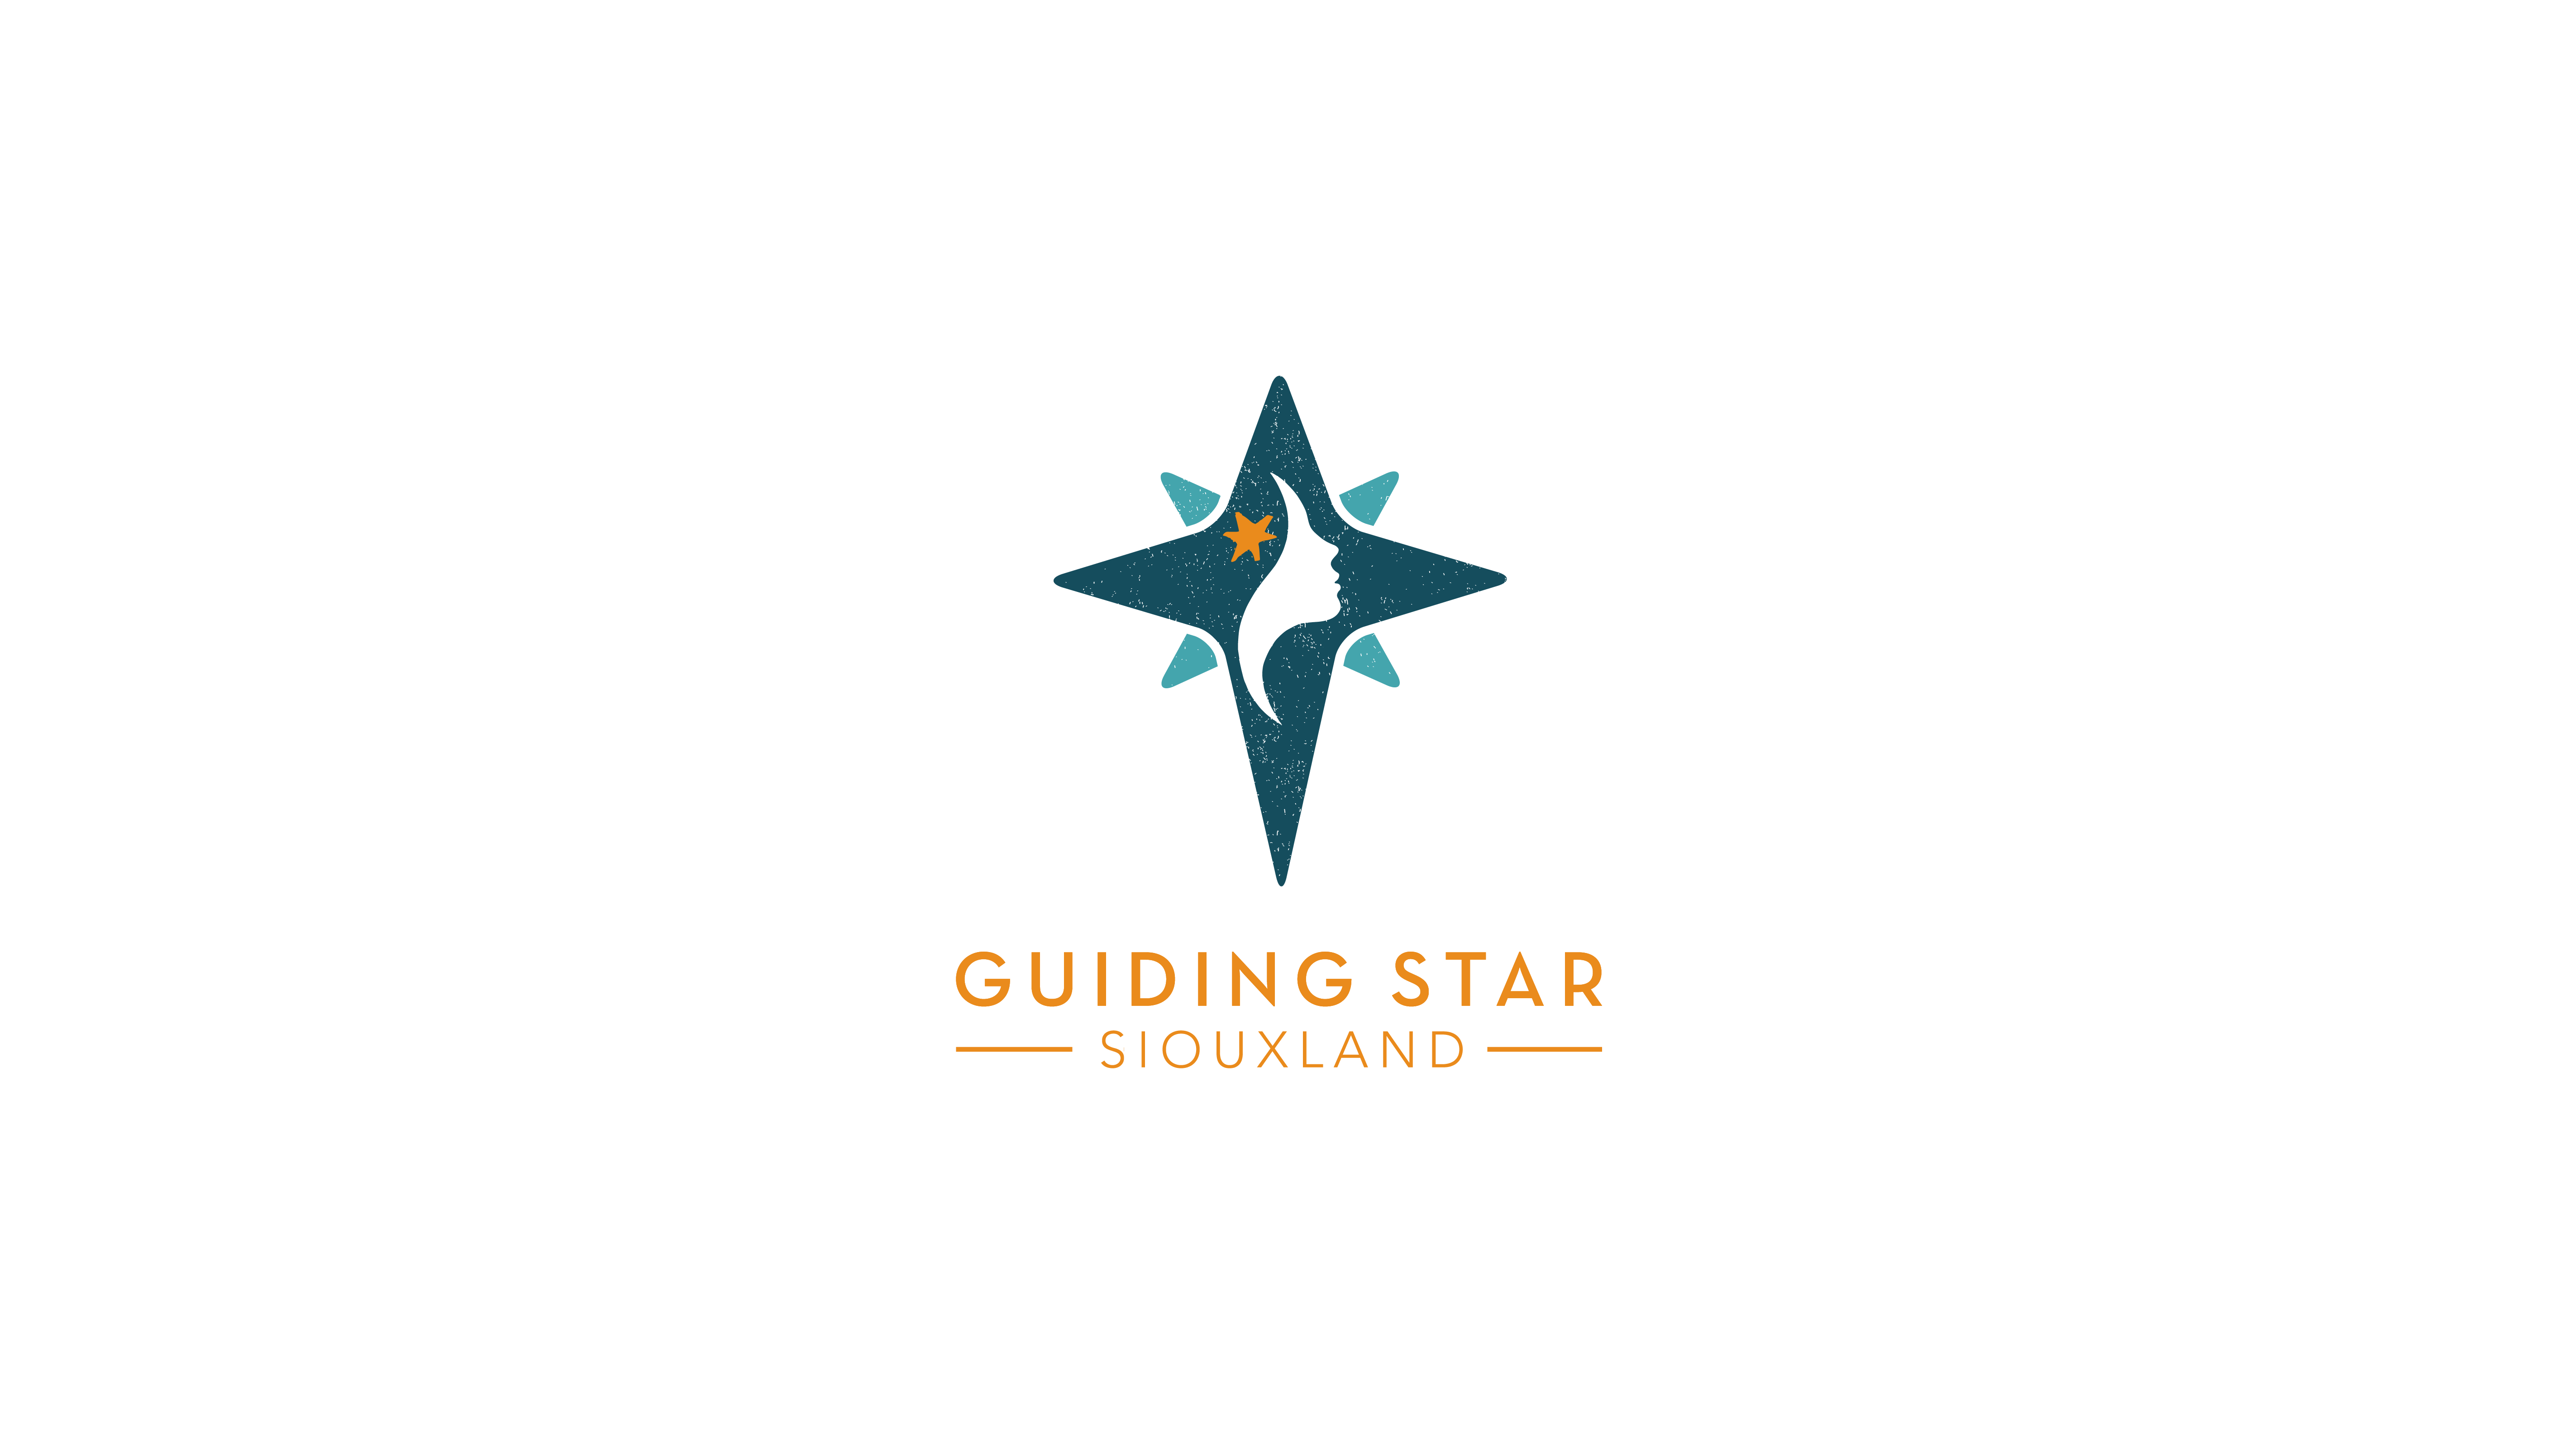 Guiding Star Siouxland webdir 01